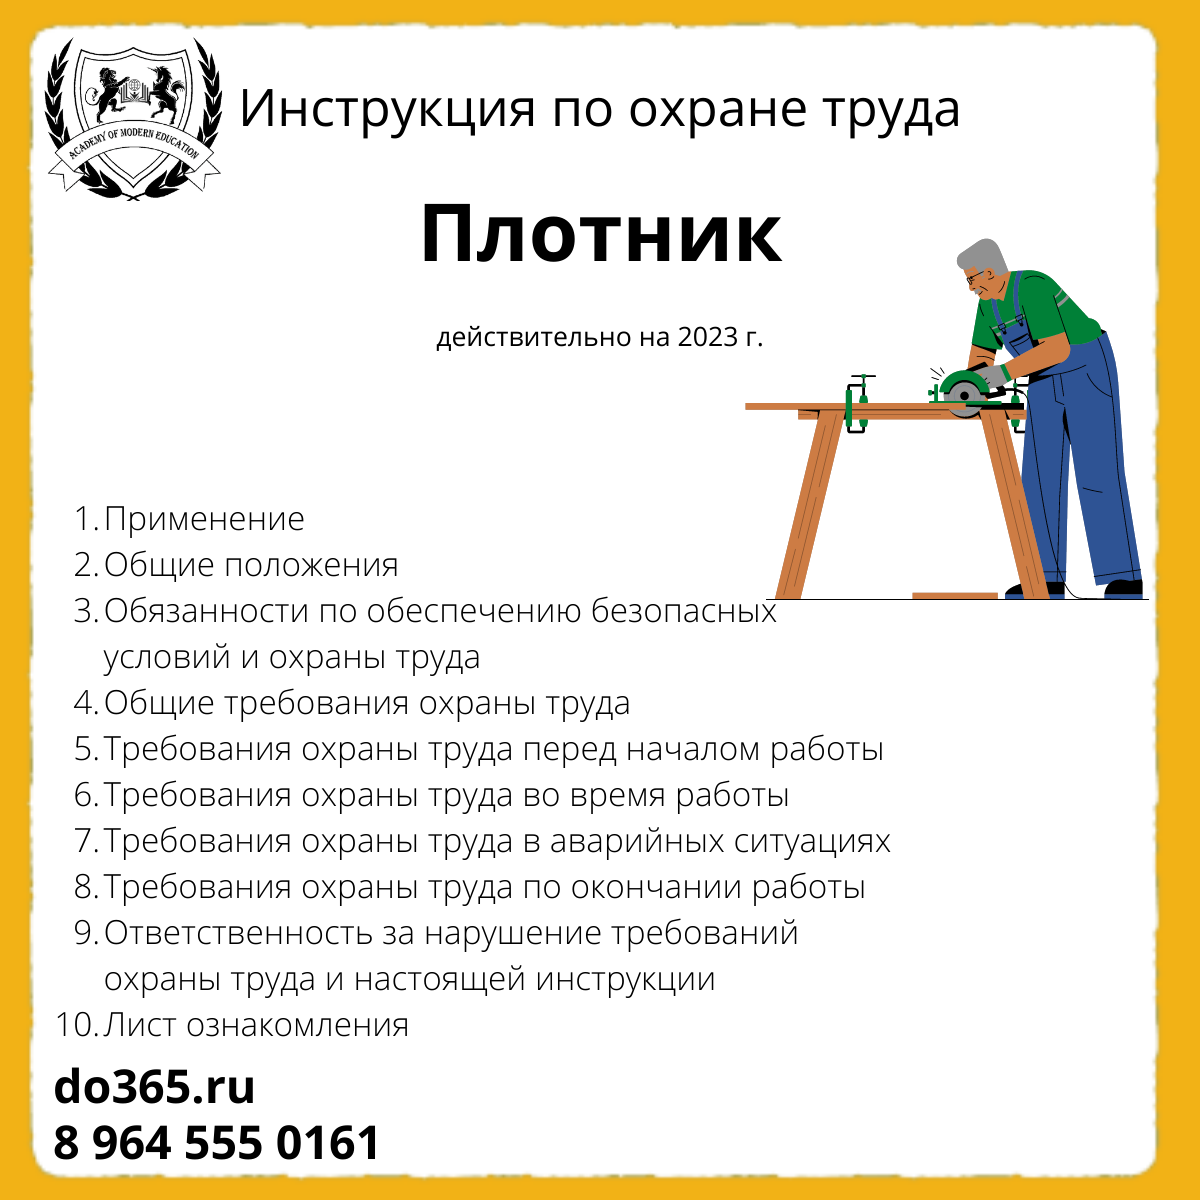 Техника безопасности плотника. Плакаты по охране труда для плотника. Инструкция плотника. Должностная инструкция плотника по охране труда.